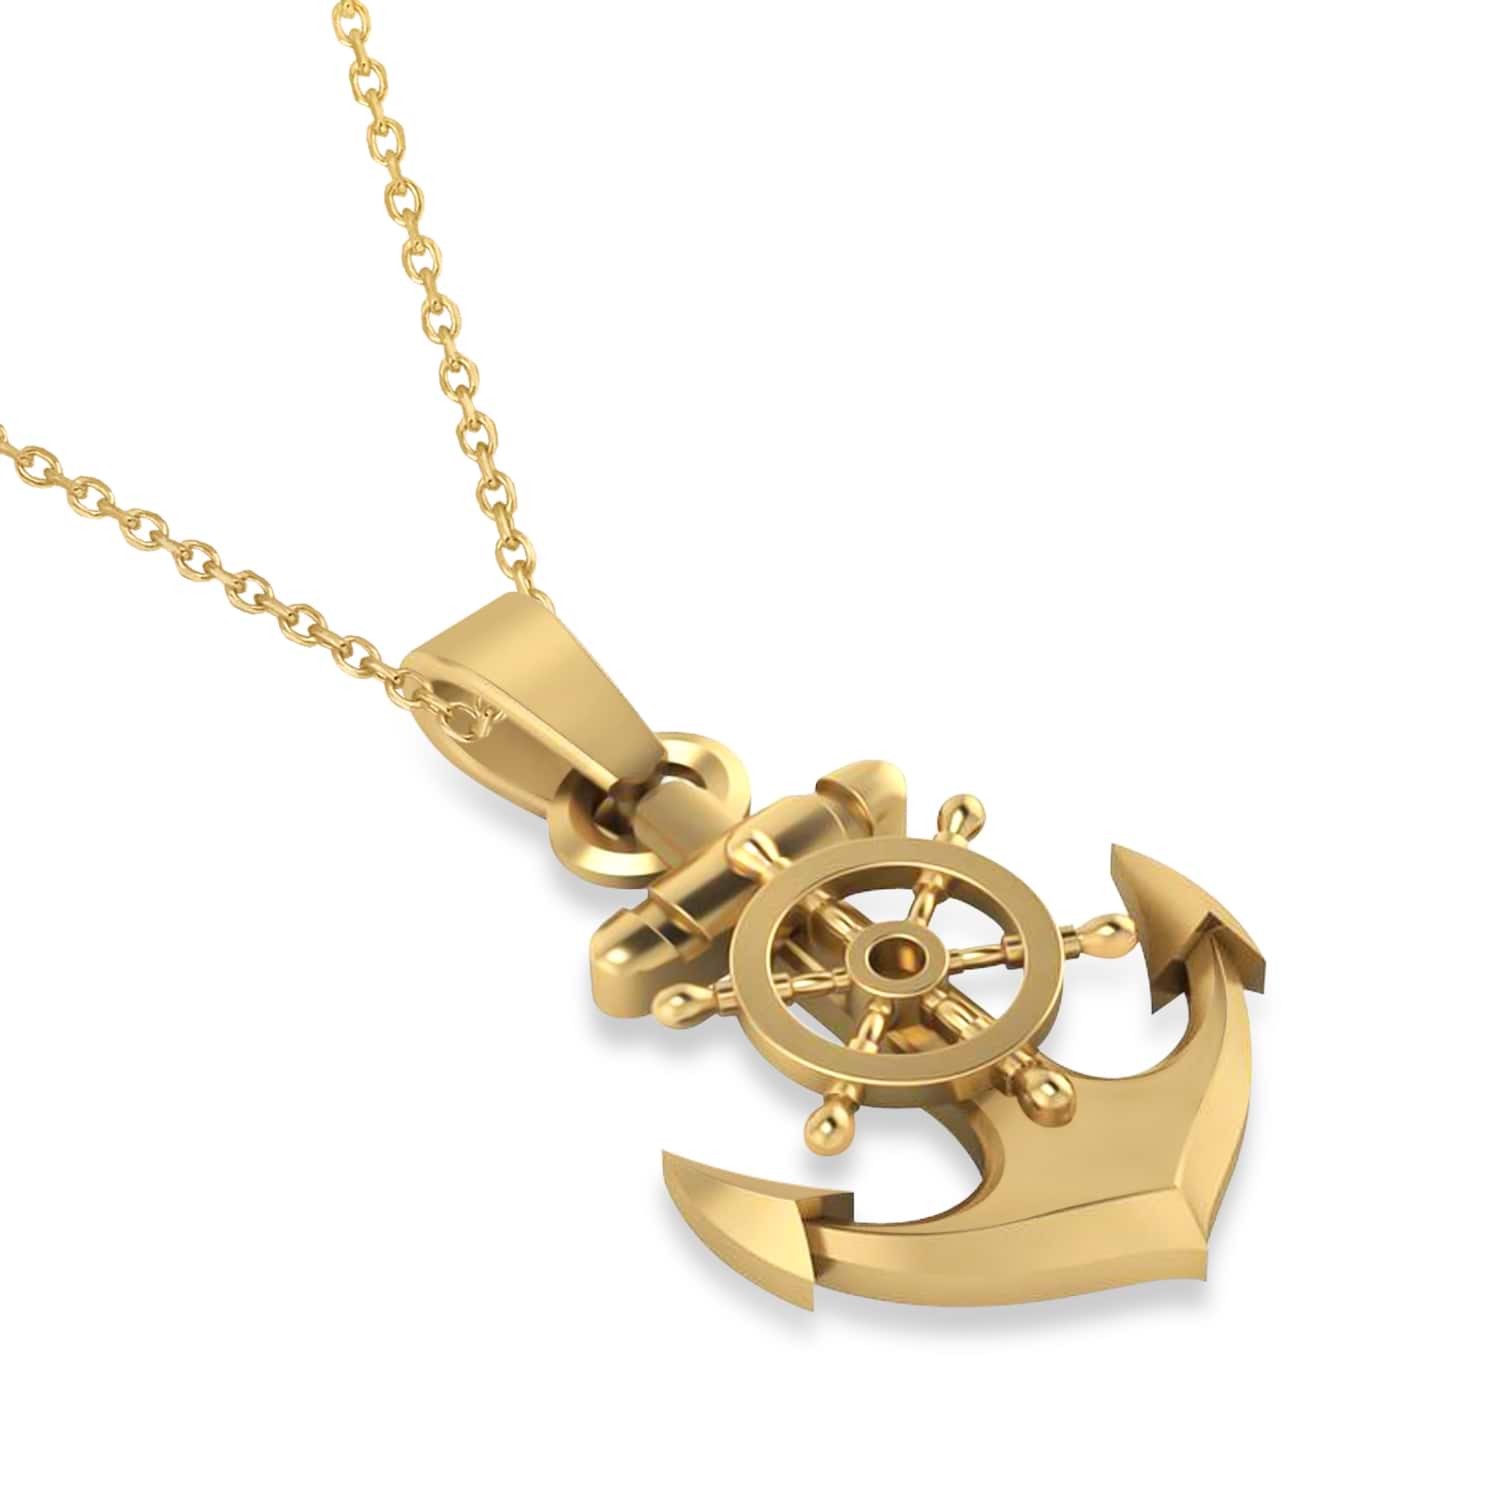 Men's Anchor With Ship's Wheel Pendant Necklace 14k Yellow Gold